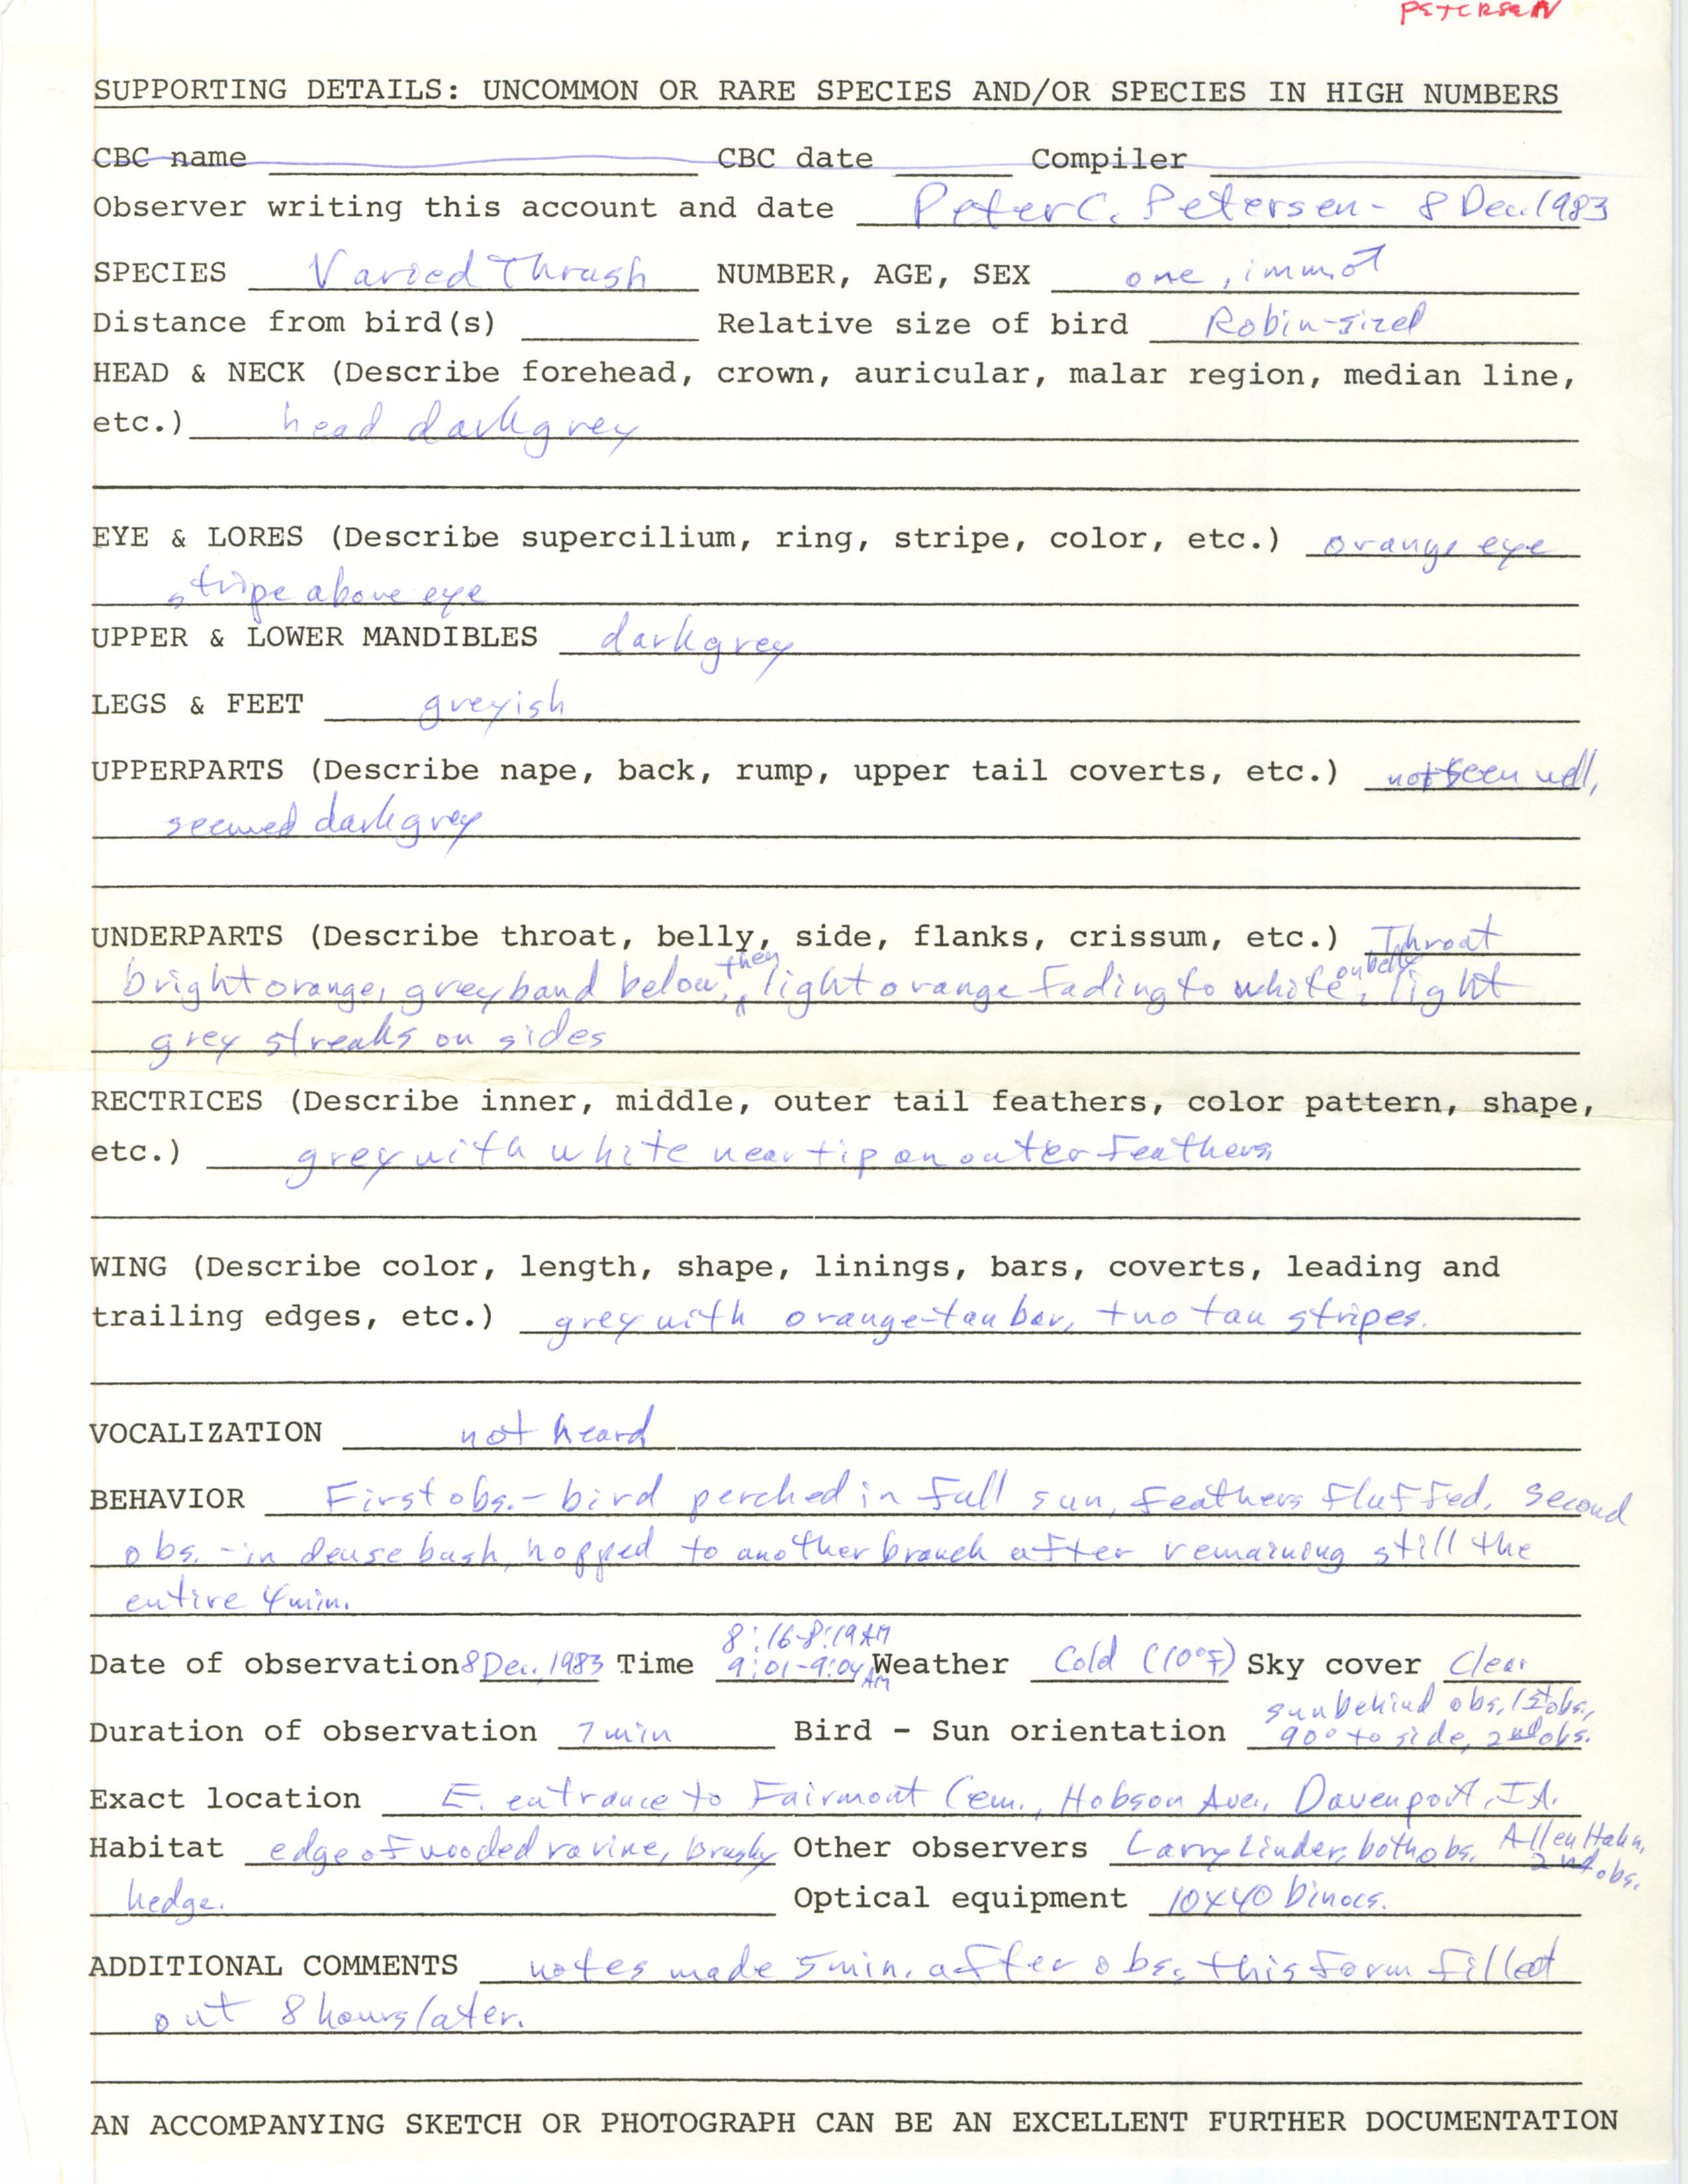 Rare bird documentation form for Varied Thrush at Fairmont Cemetery in Davenport, 1983